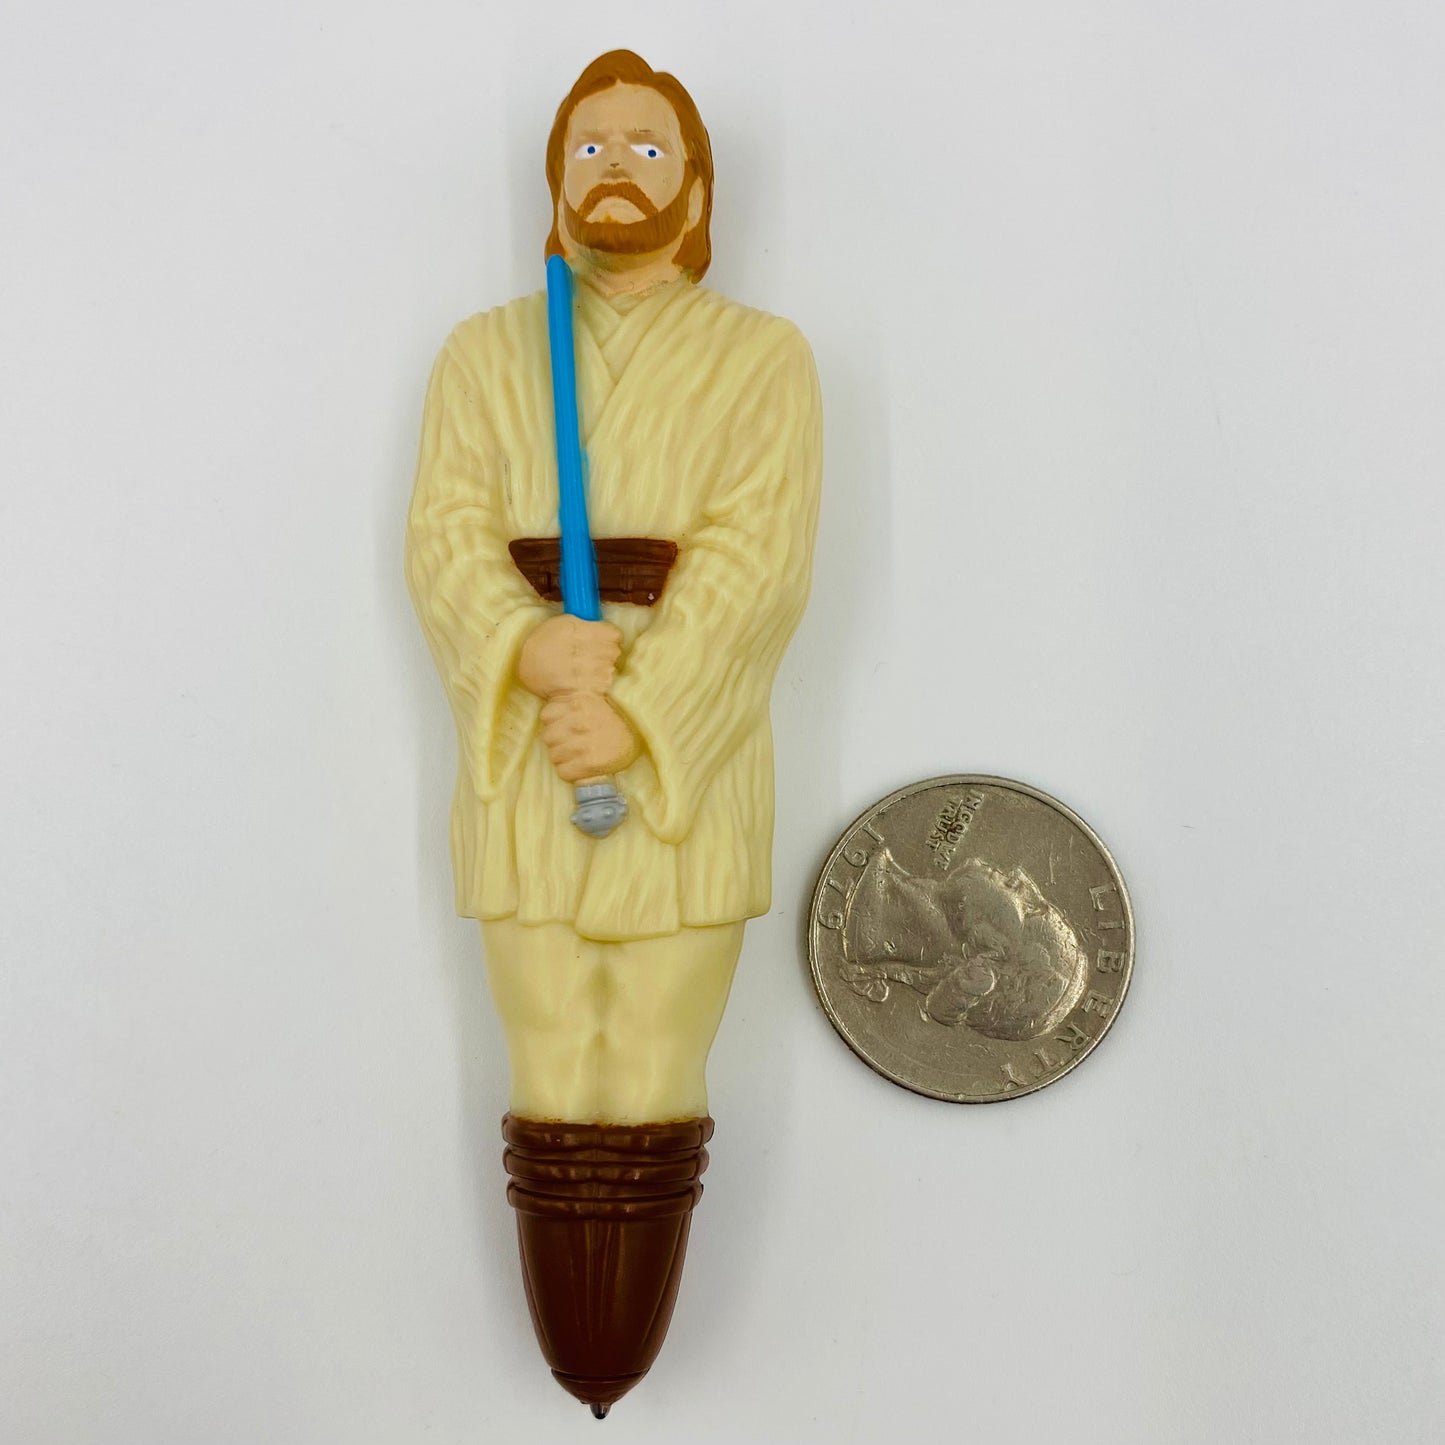 General Mills Star Wars Obi-Wan Kenobi pen (2013) loose